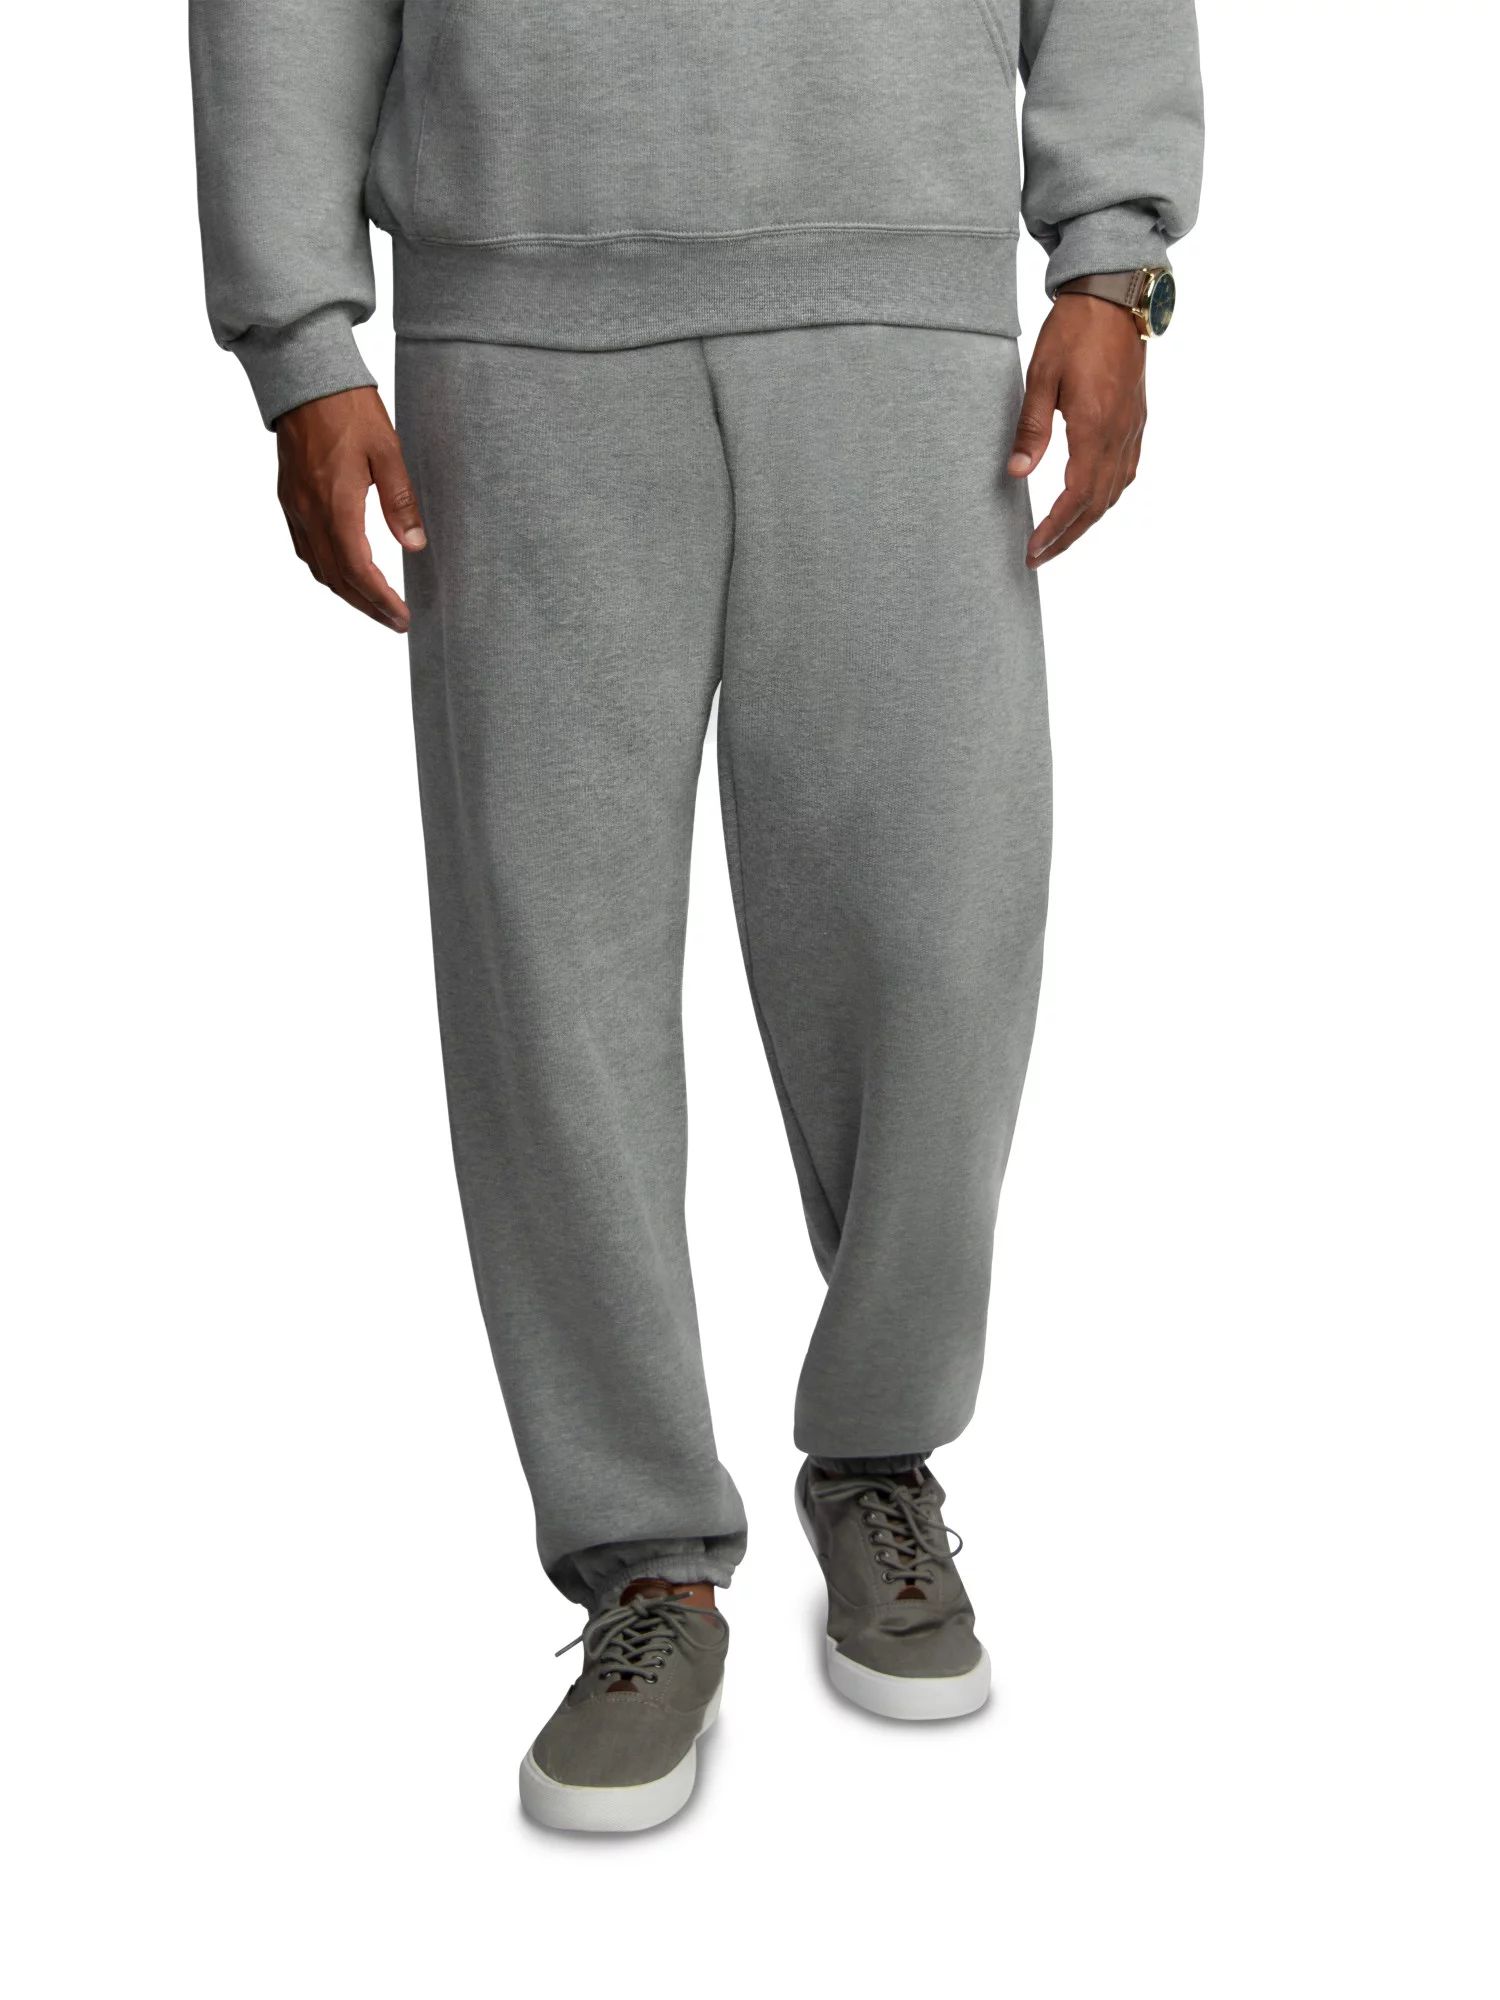 Fruit of the Loom Men's EverSoft Fleece Elastic Bottom Sweatpants Sizes S-4XL | Walmart (US)